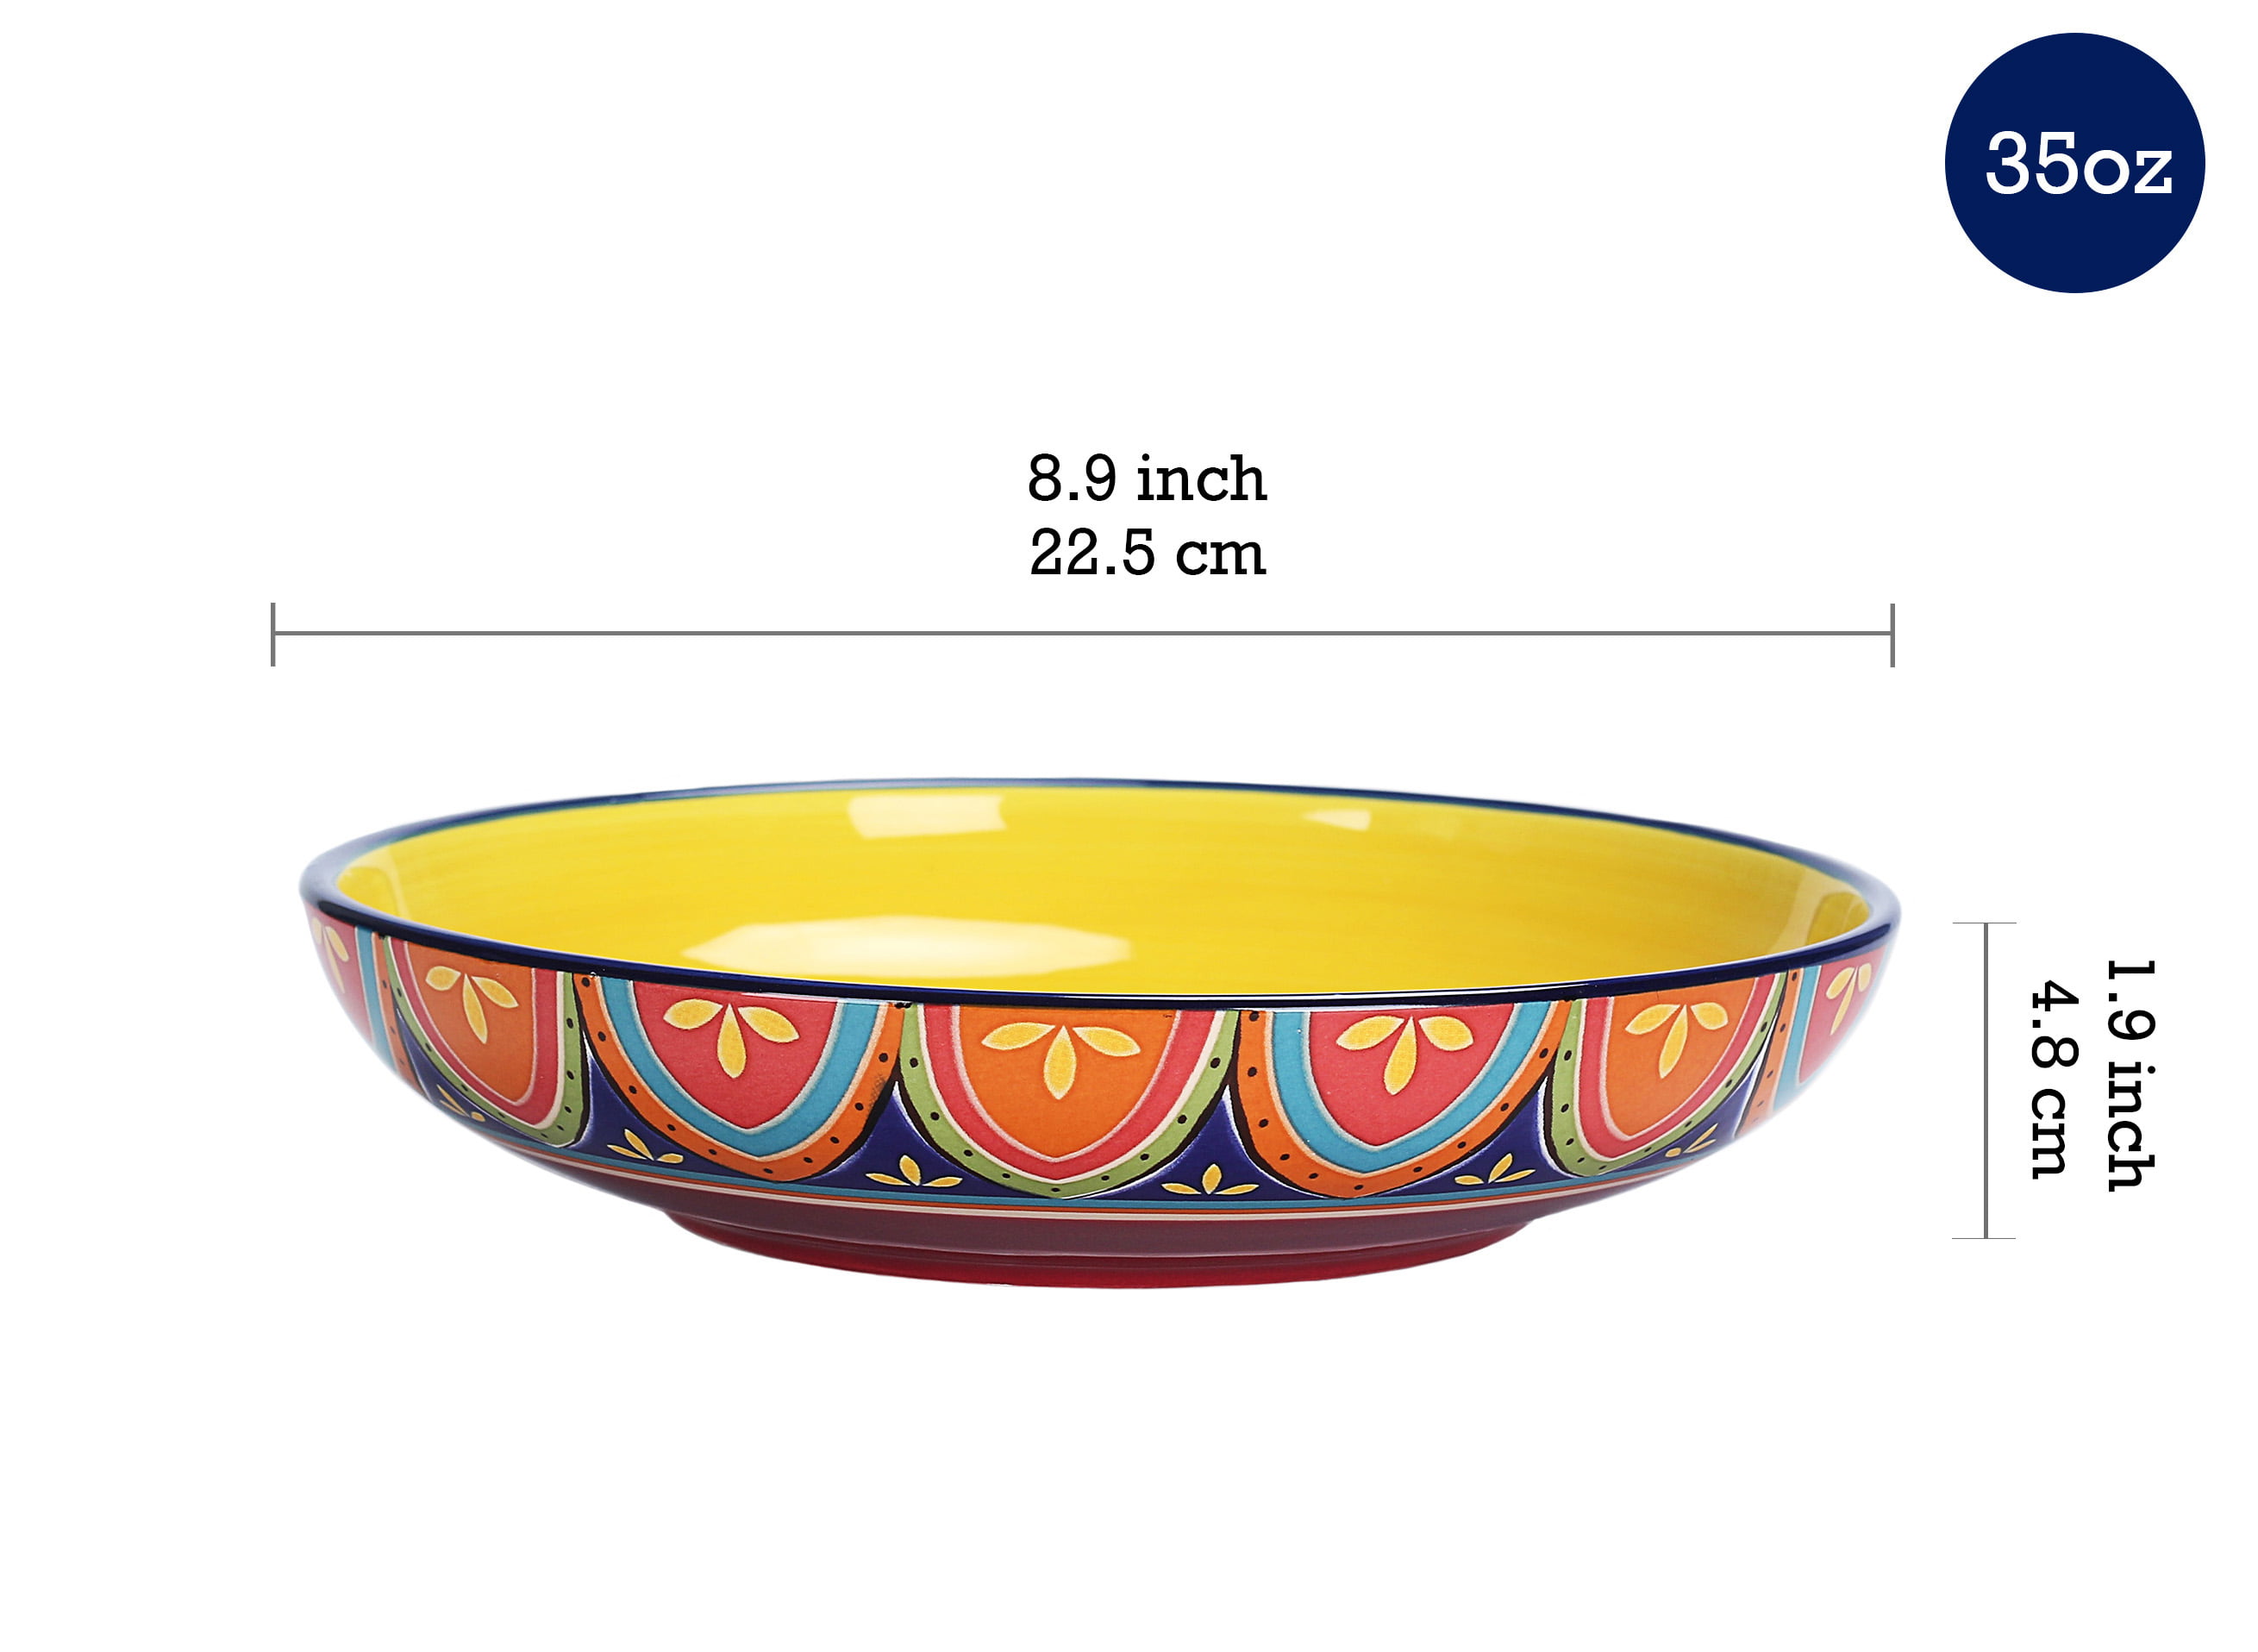 Bico Flower Carnival Ceramic 35oz Dinner Bowls, Set of 4, for 